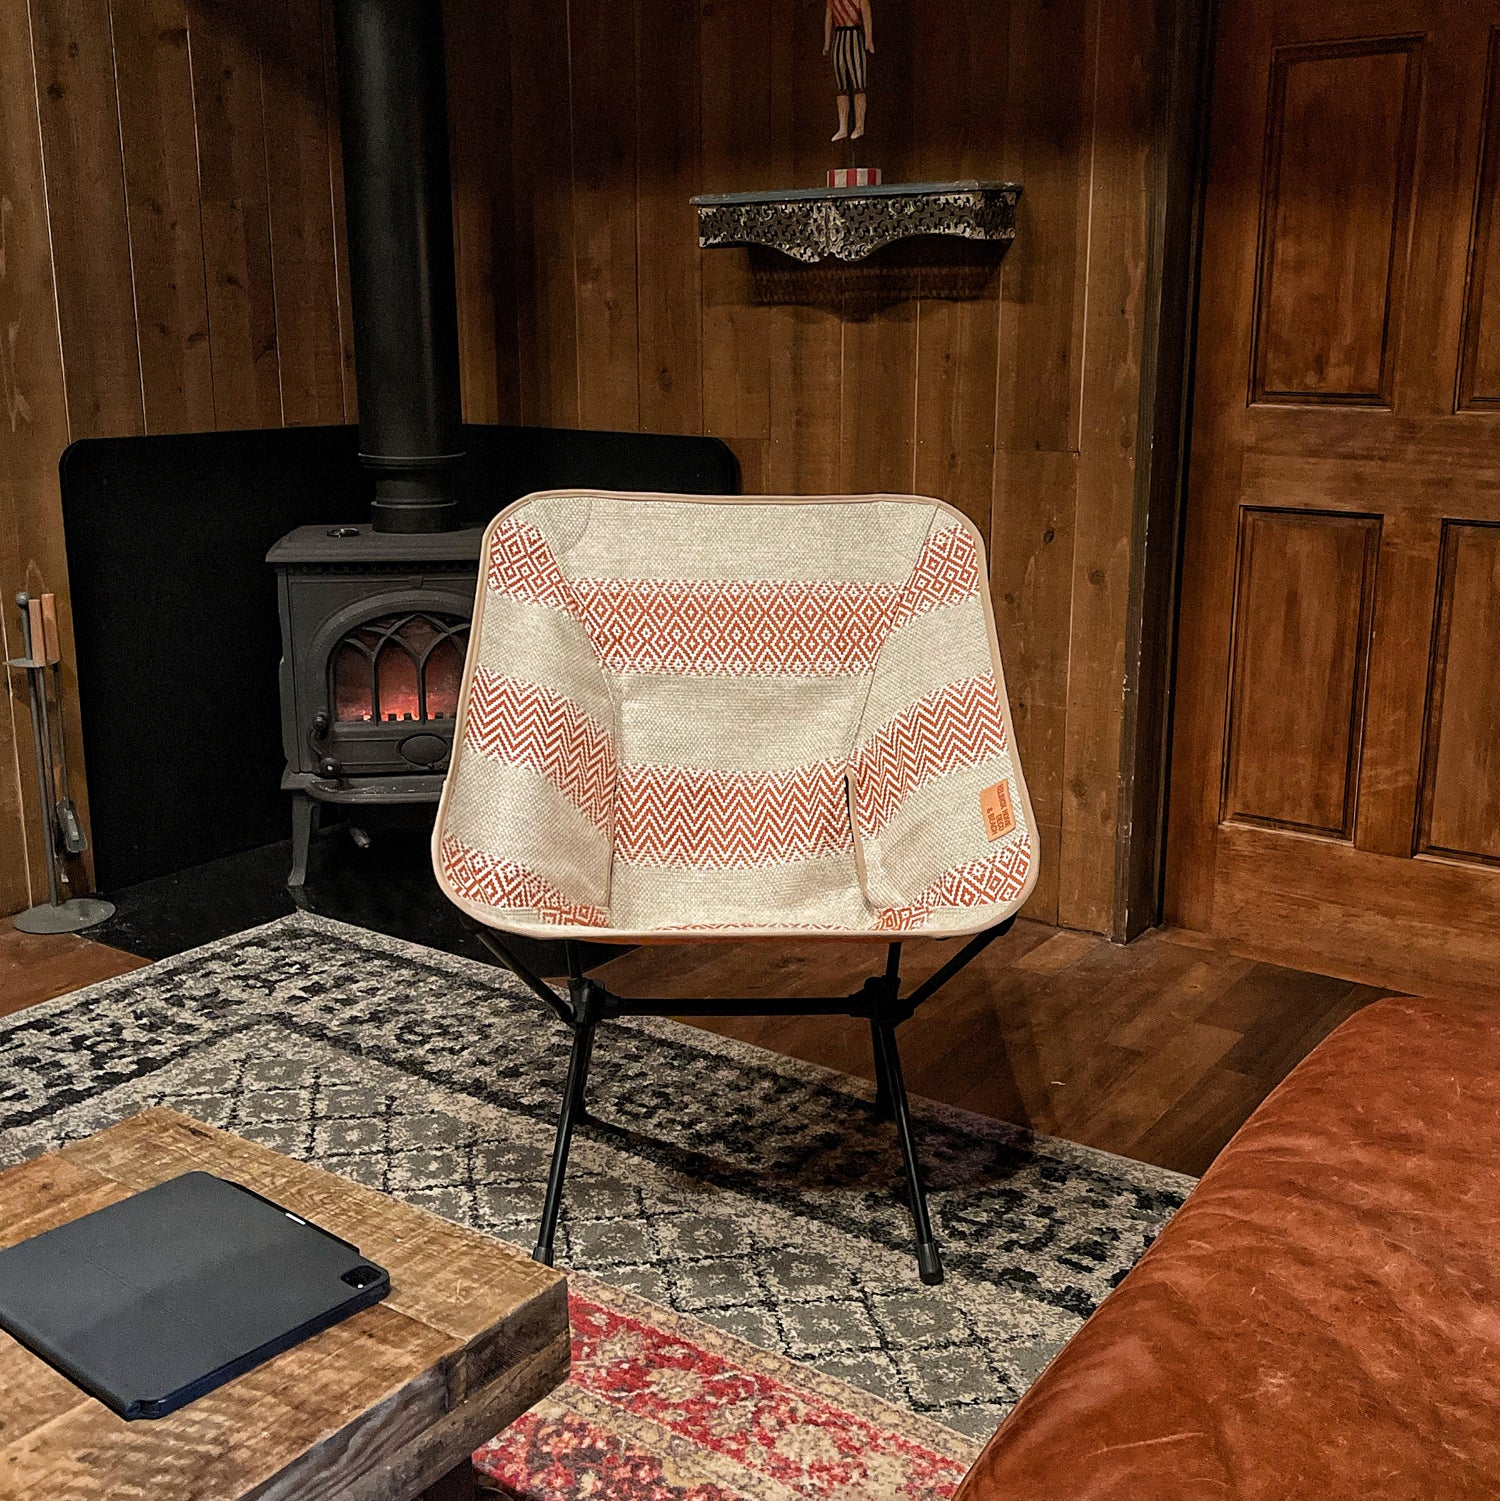 CUB113 Helinox comfort chair XL